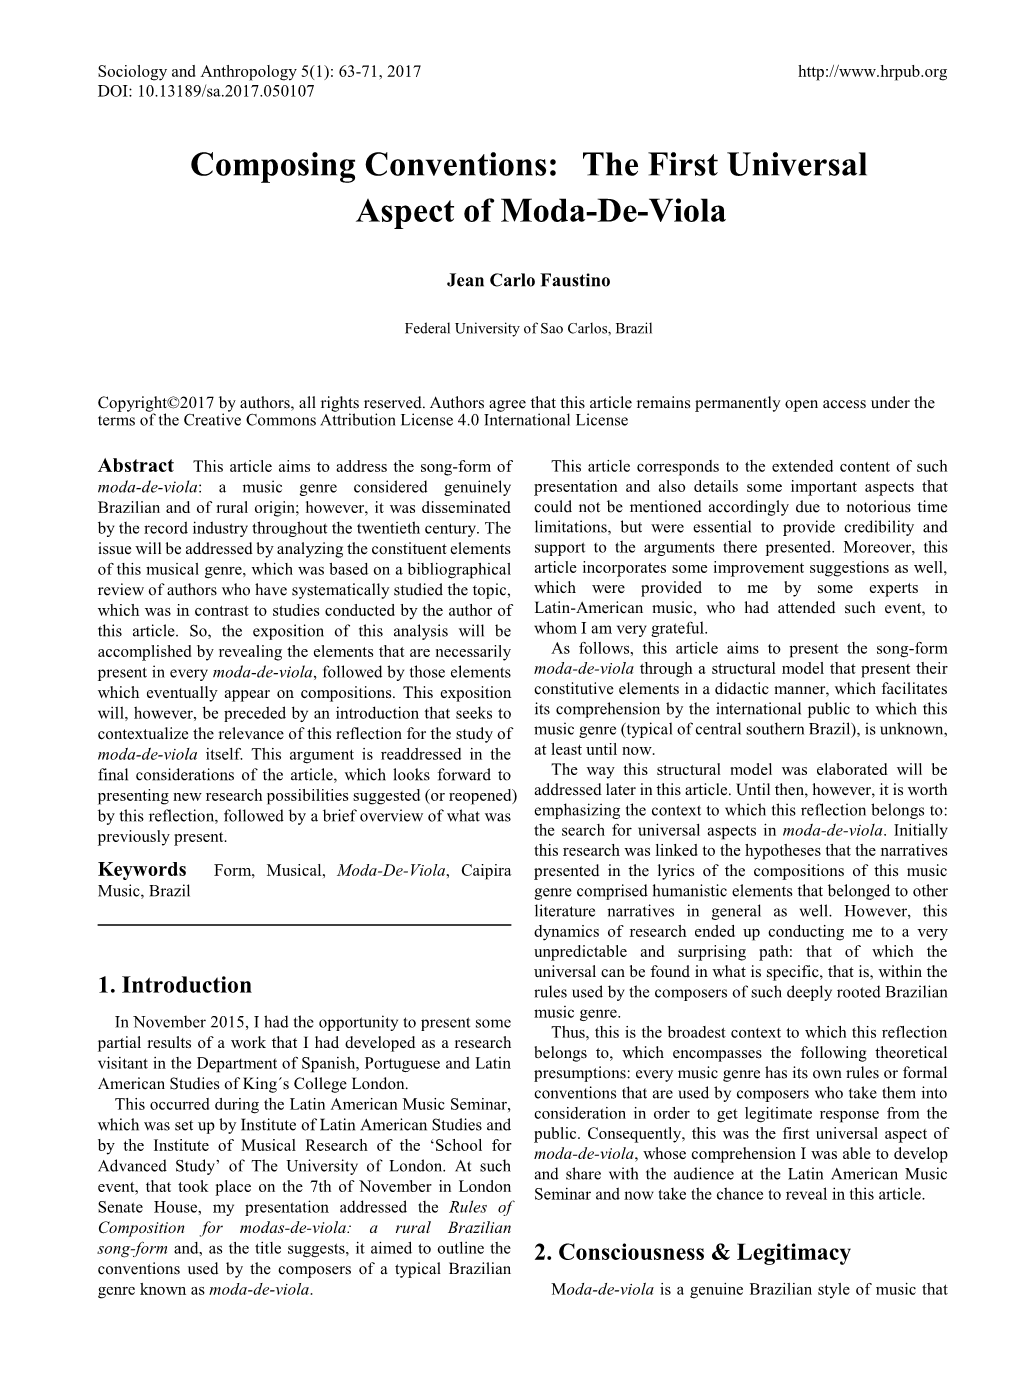 Composing Conventions: the First Universal Aspect of Moda-De-Viola